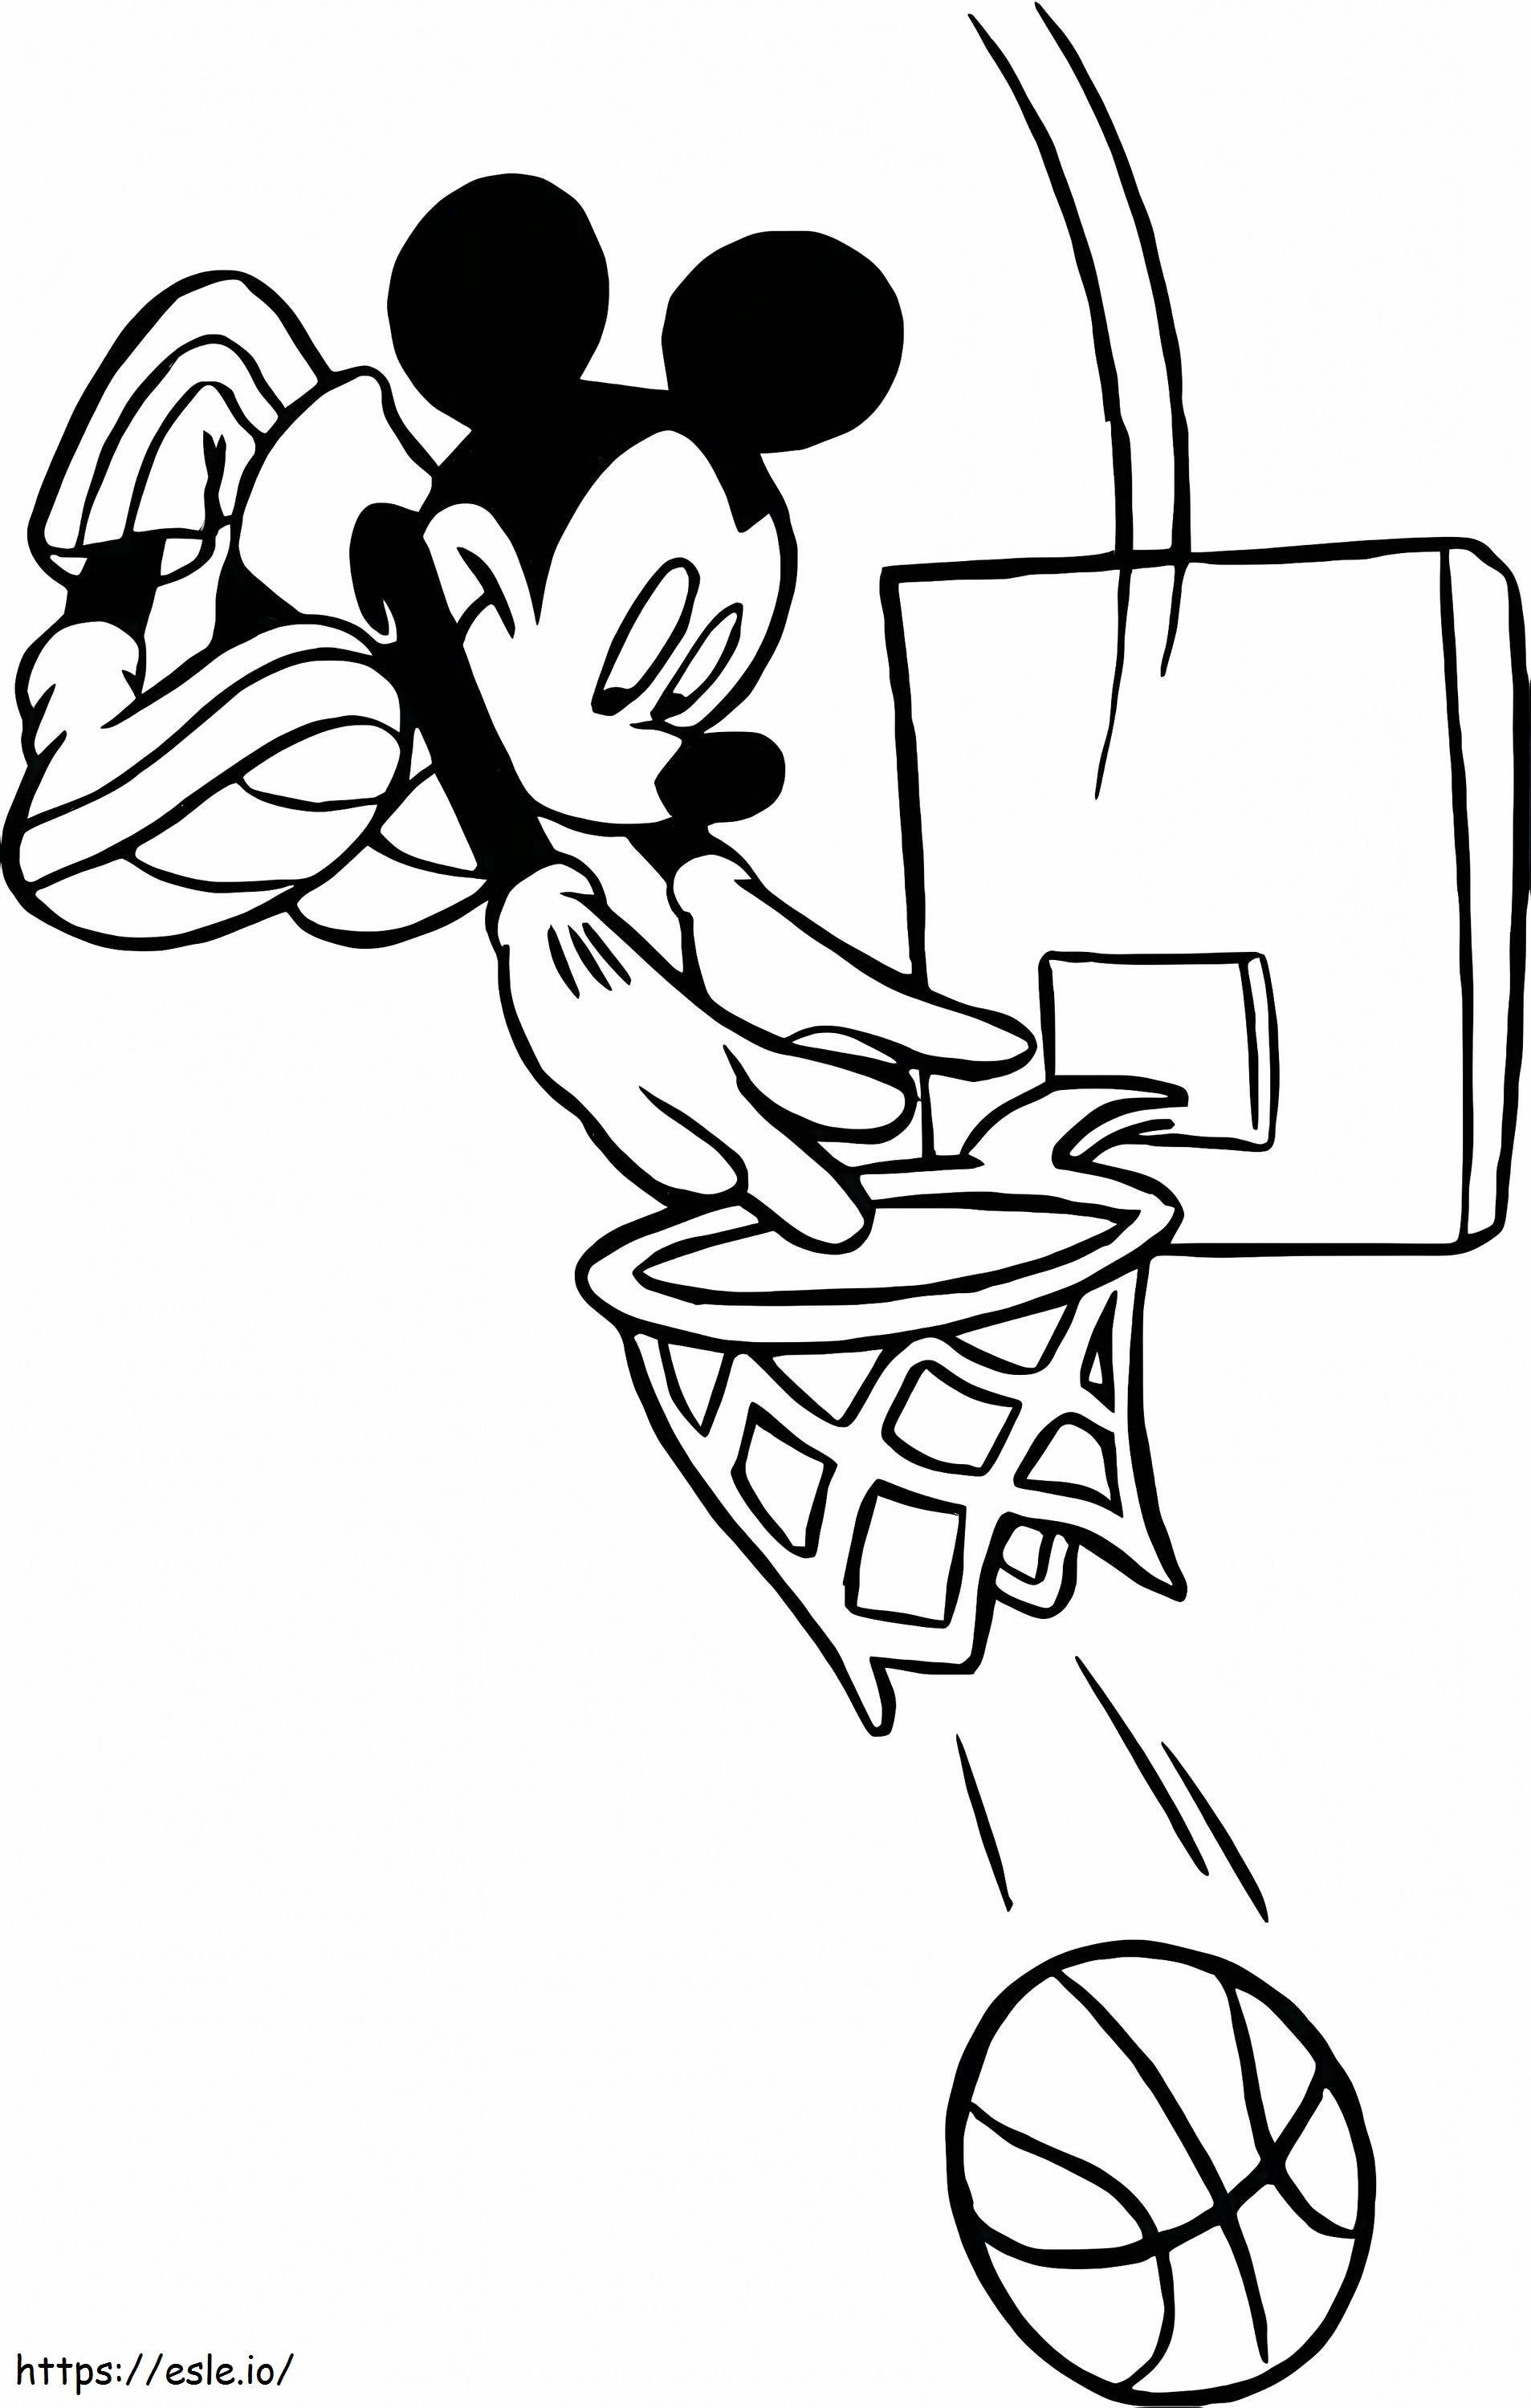 Mickey jucând baschet de colorat